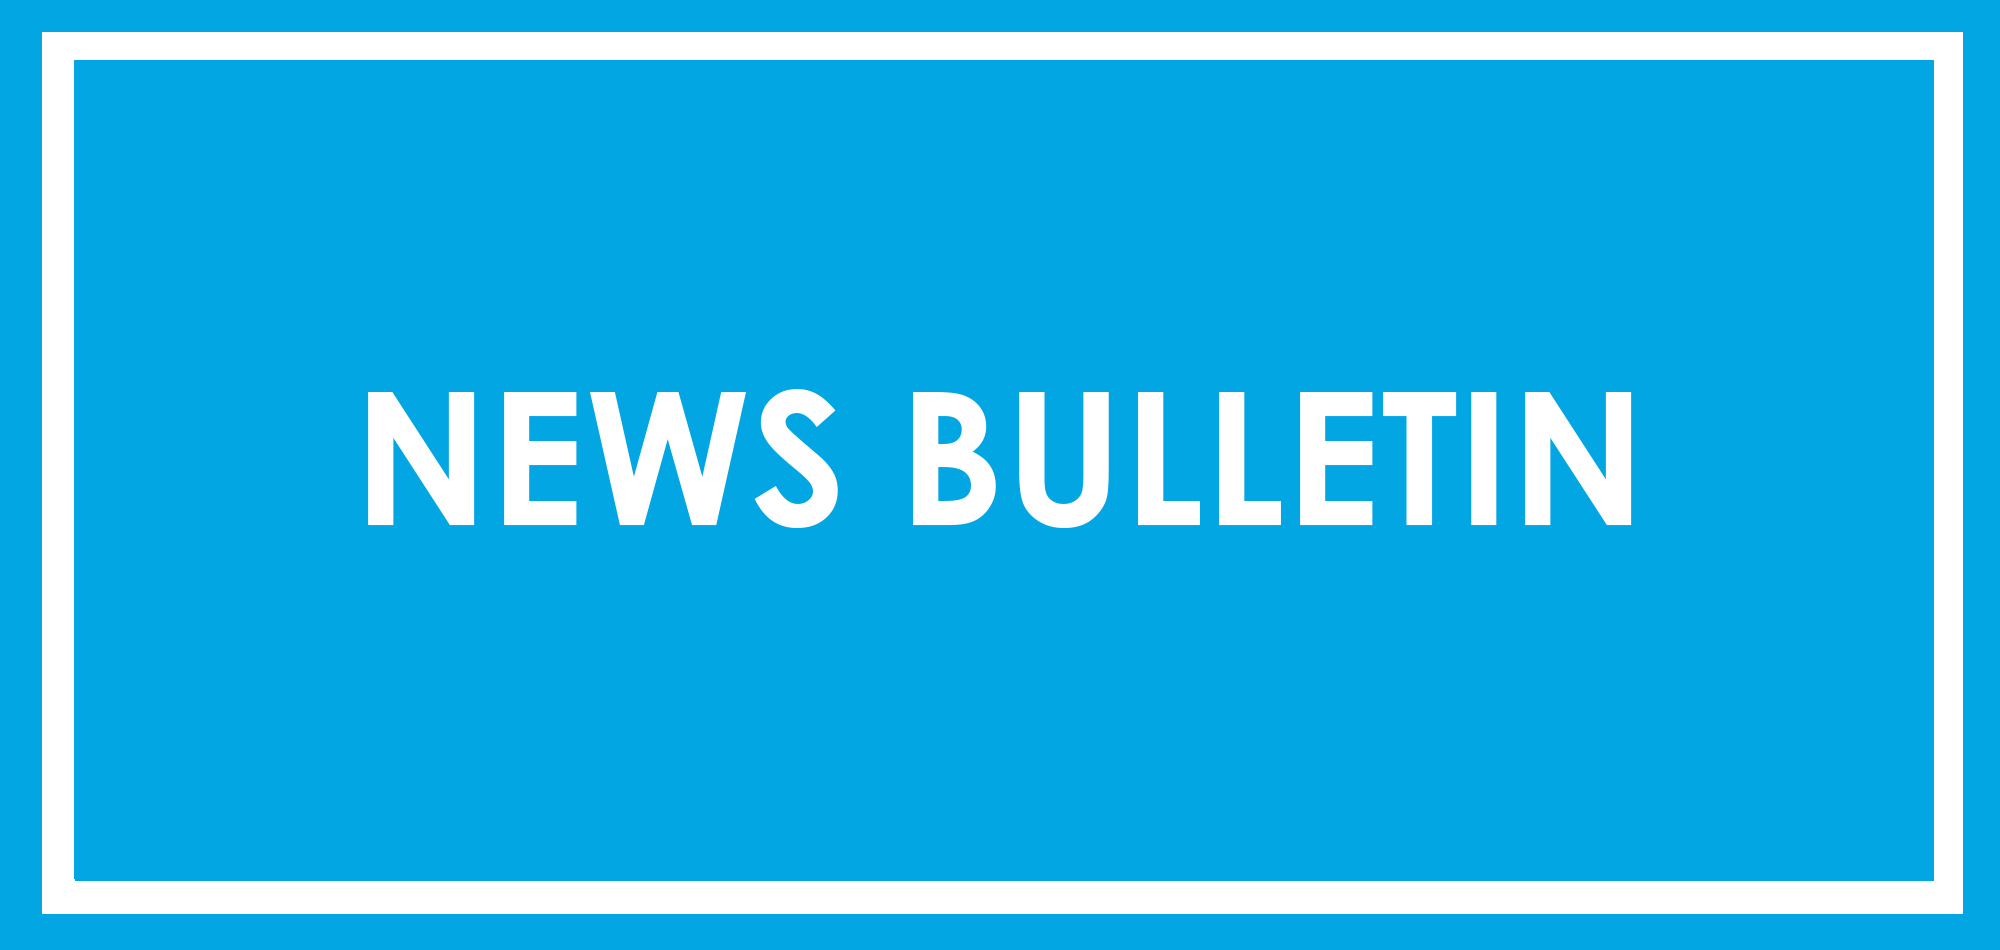 News Bulletin - 27.07.21